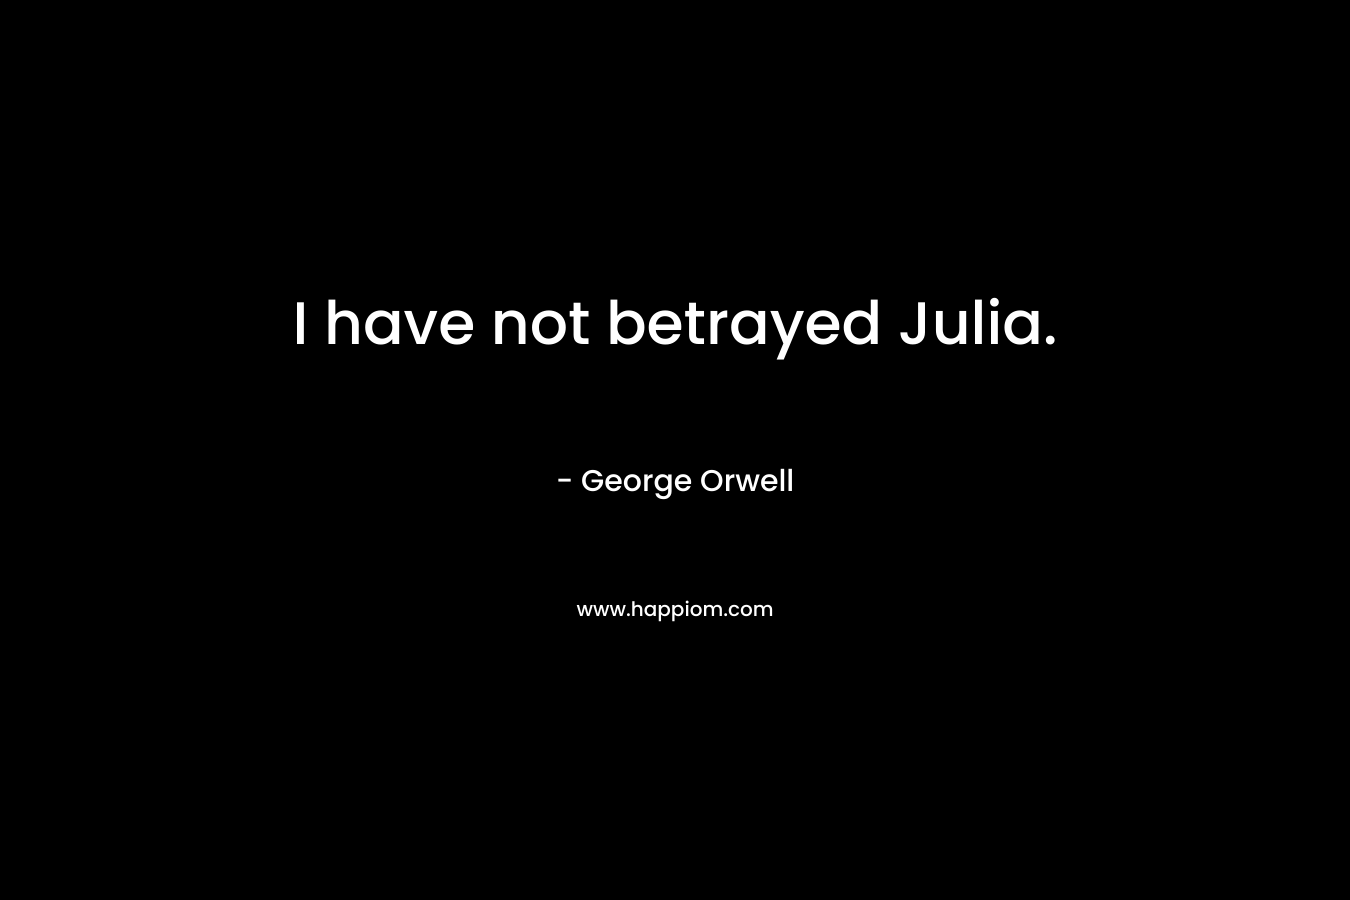 I have not betrayed Julia.